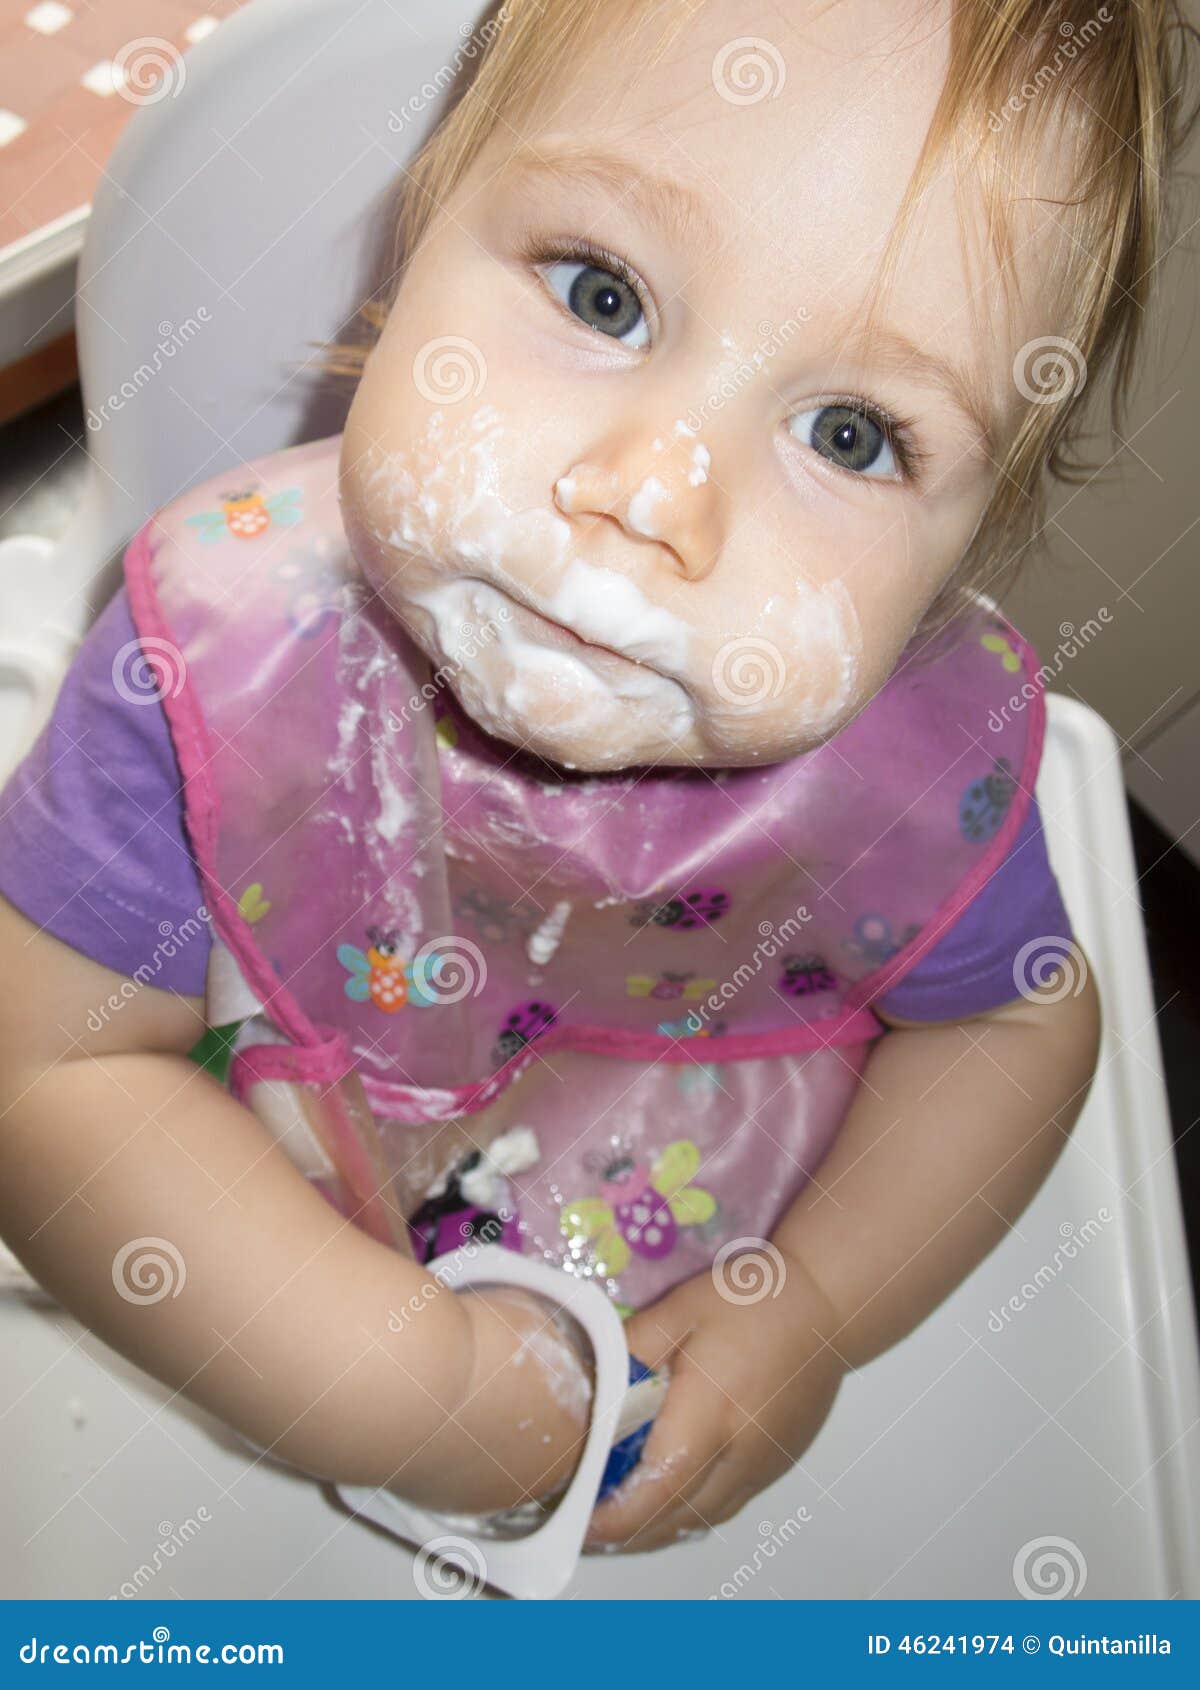 Baby Dirty Face White Yogurt In High-chair Stock Photo ...